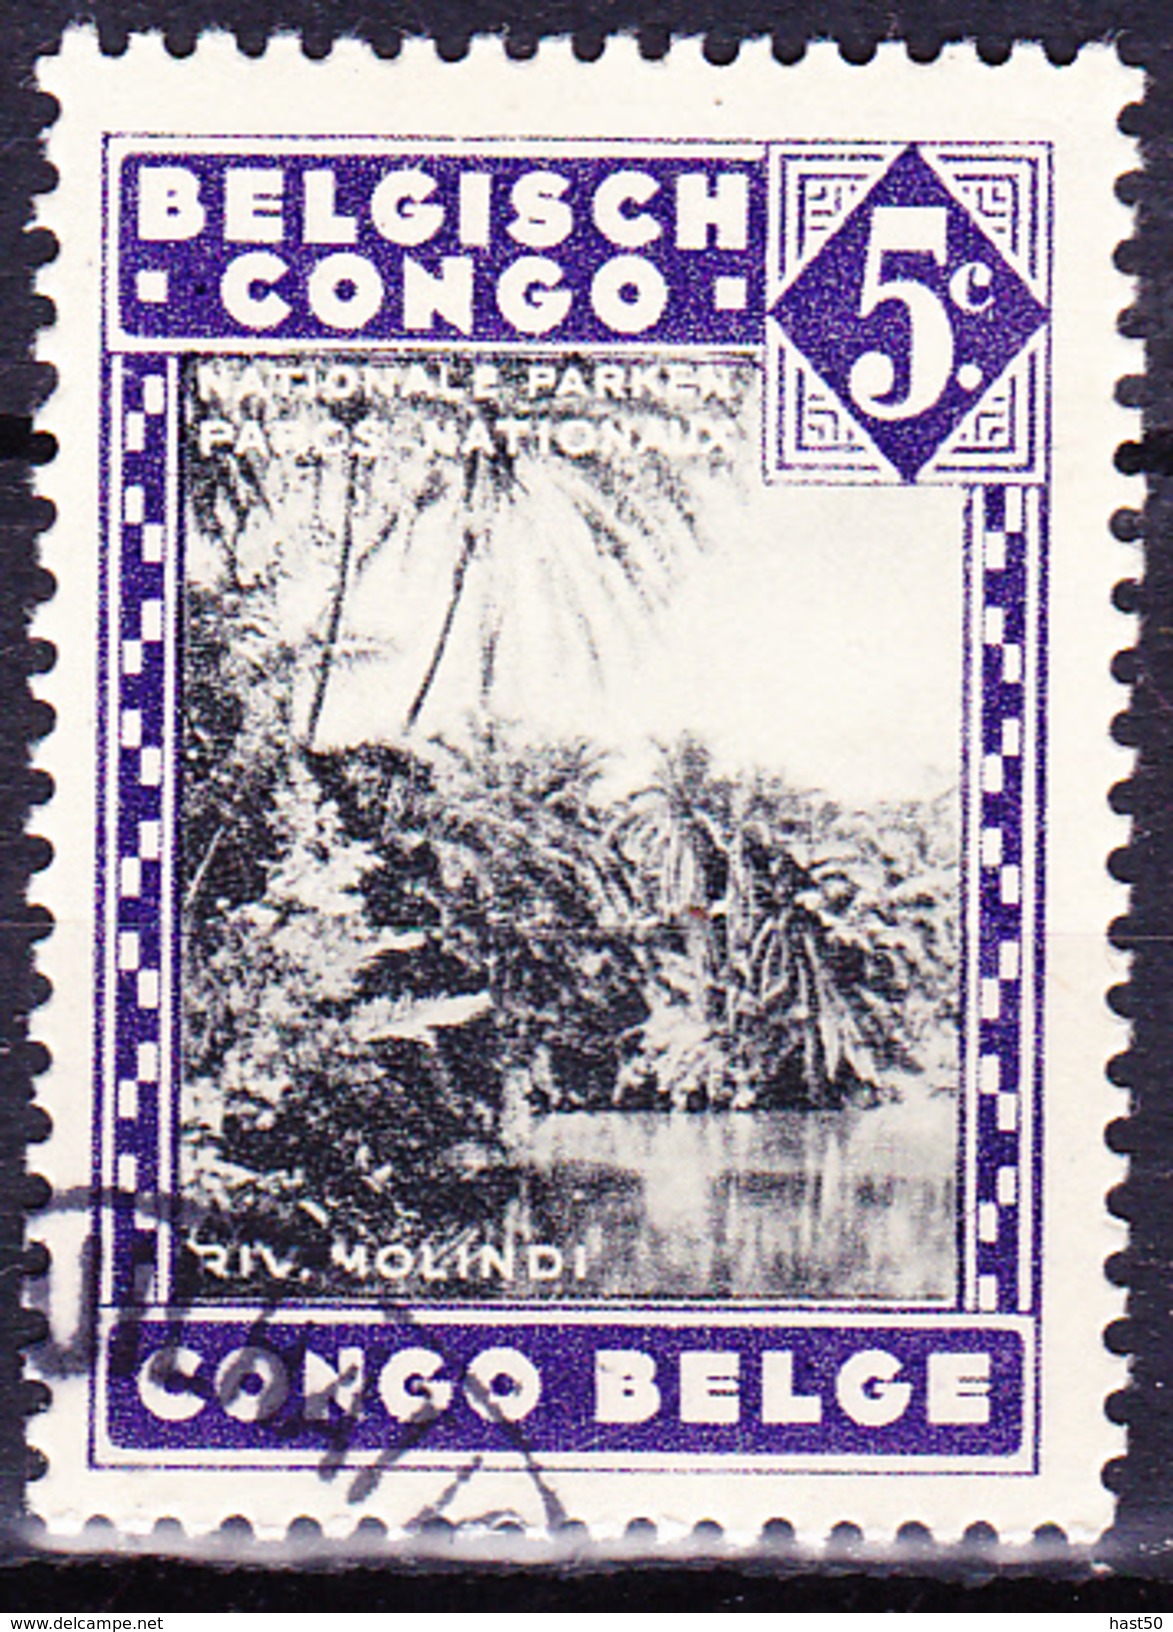 Belgisch-Congo Congo-Belge - Molindifluss/Molindi River (MiNr: 173) 1935 - Gest. Used Obl. - Usati